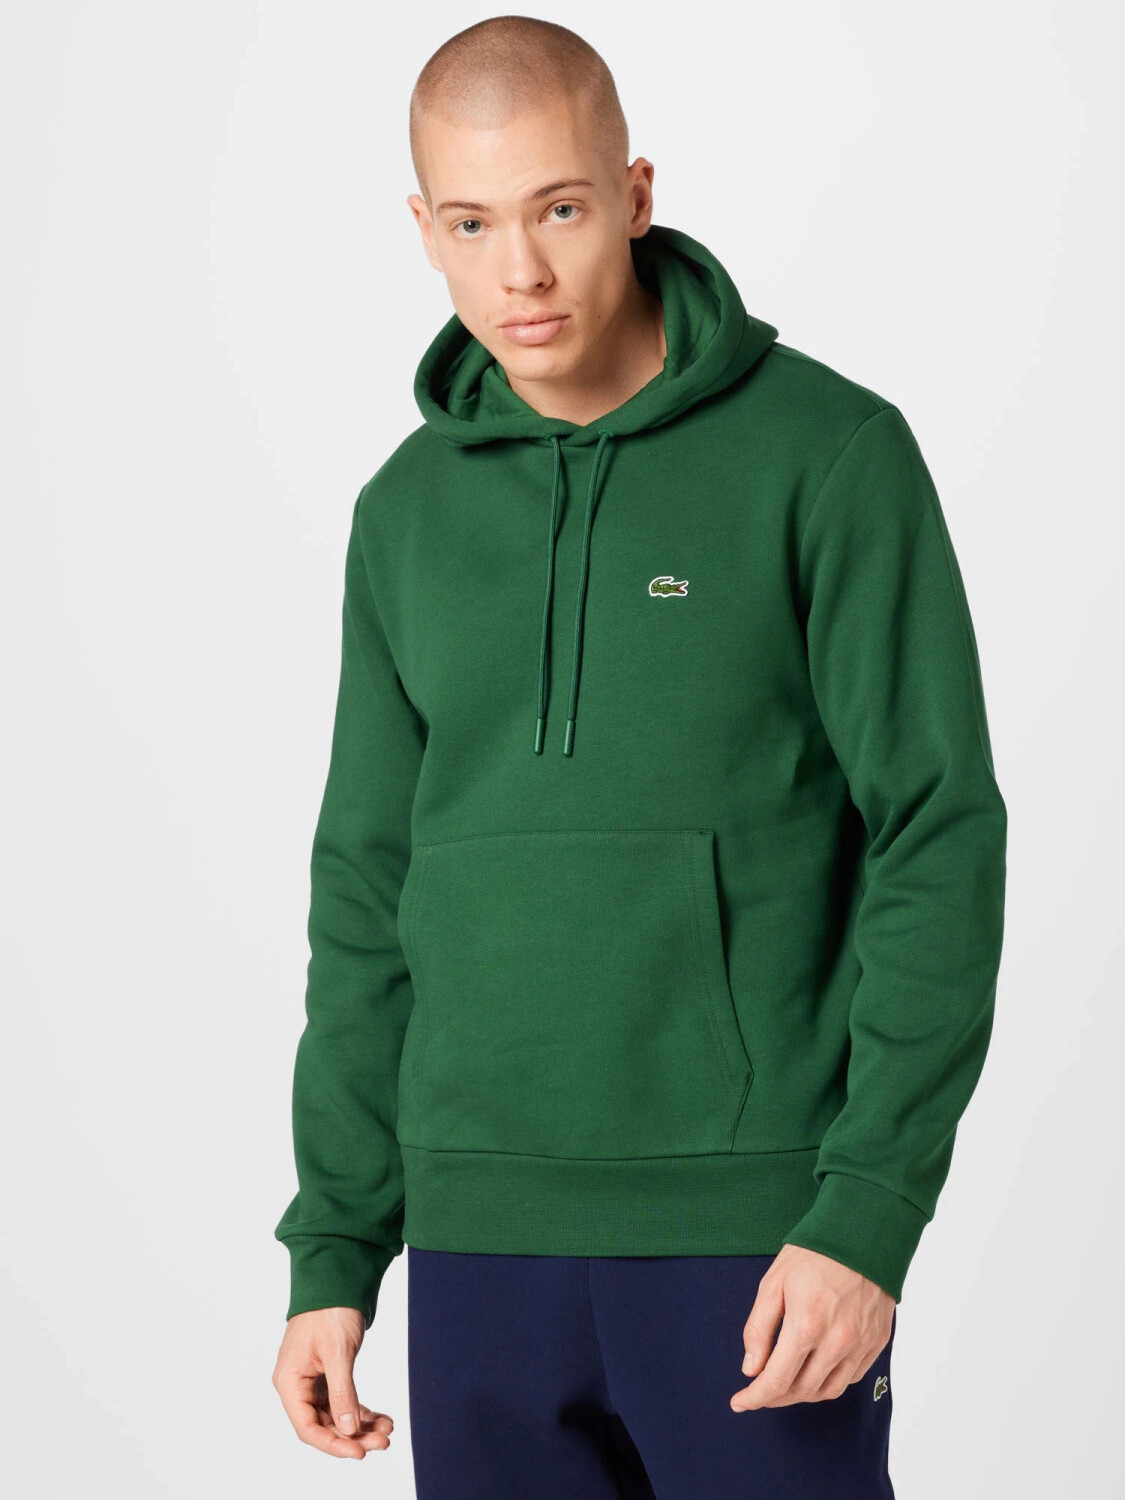 Disco udlejeren morder Buy Lacoste Sweatshirt (SH9623) green from £69.49 (Today) – Best Deals on  idealo.co.uk